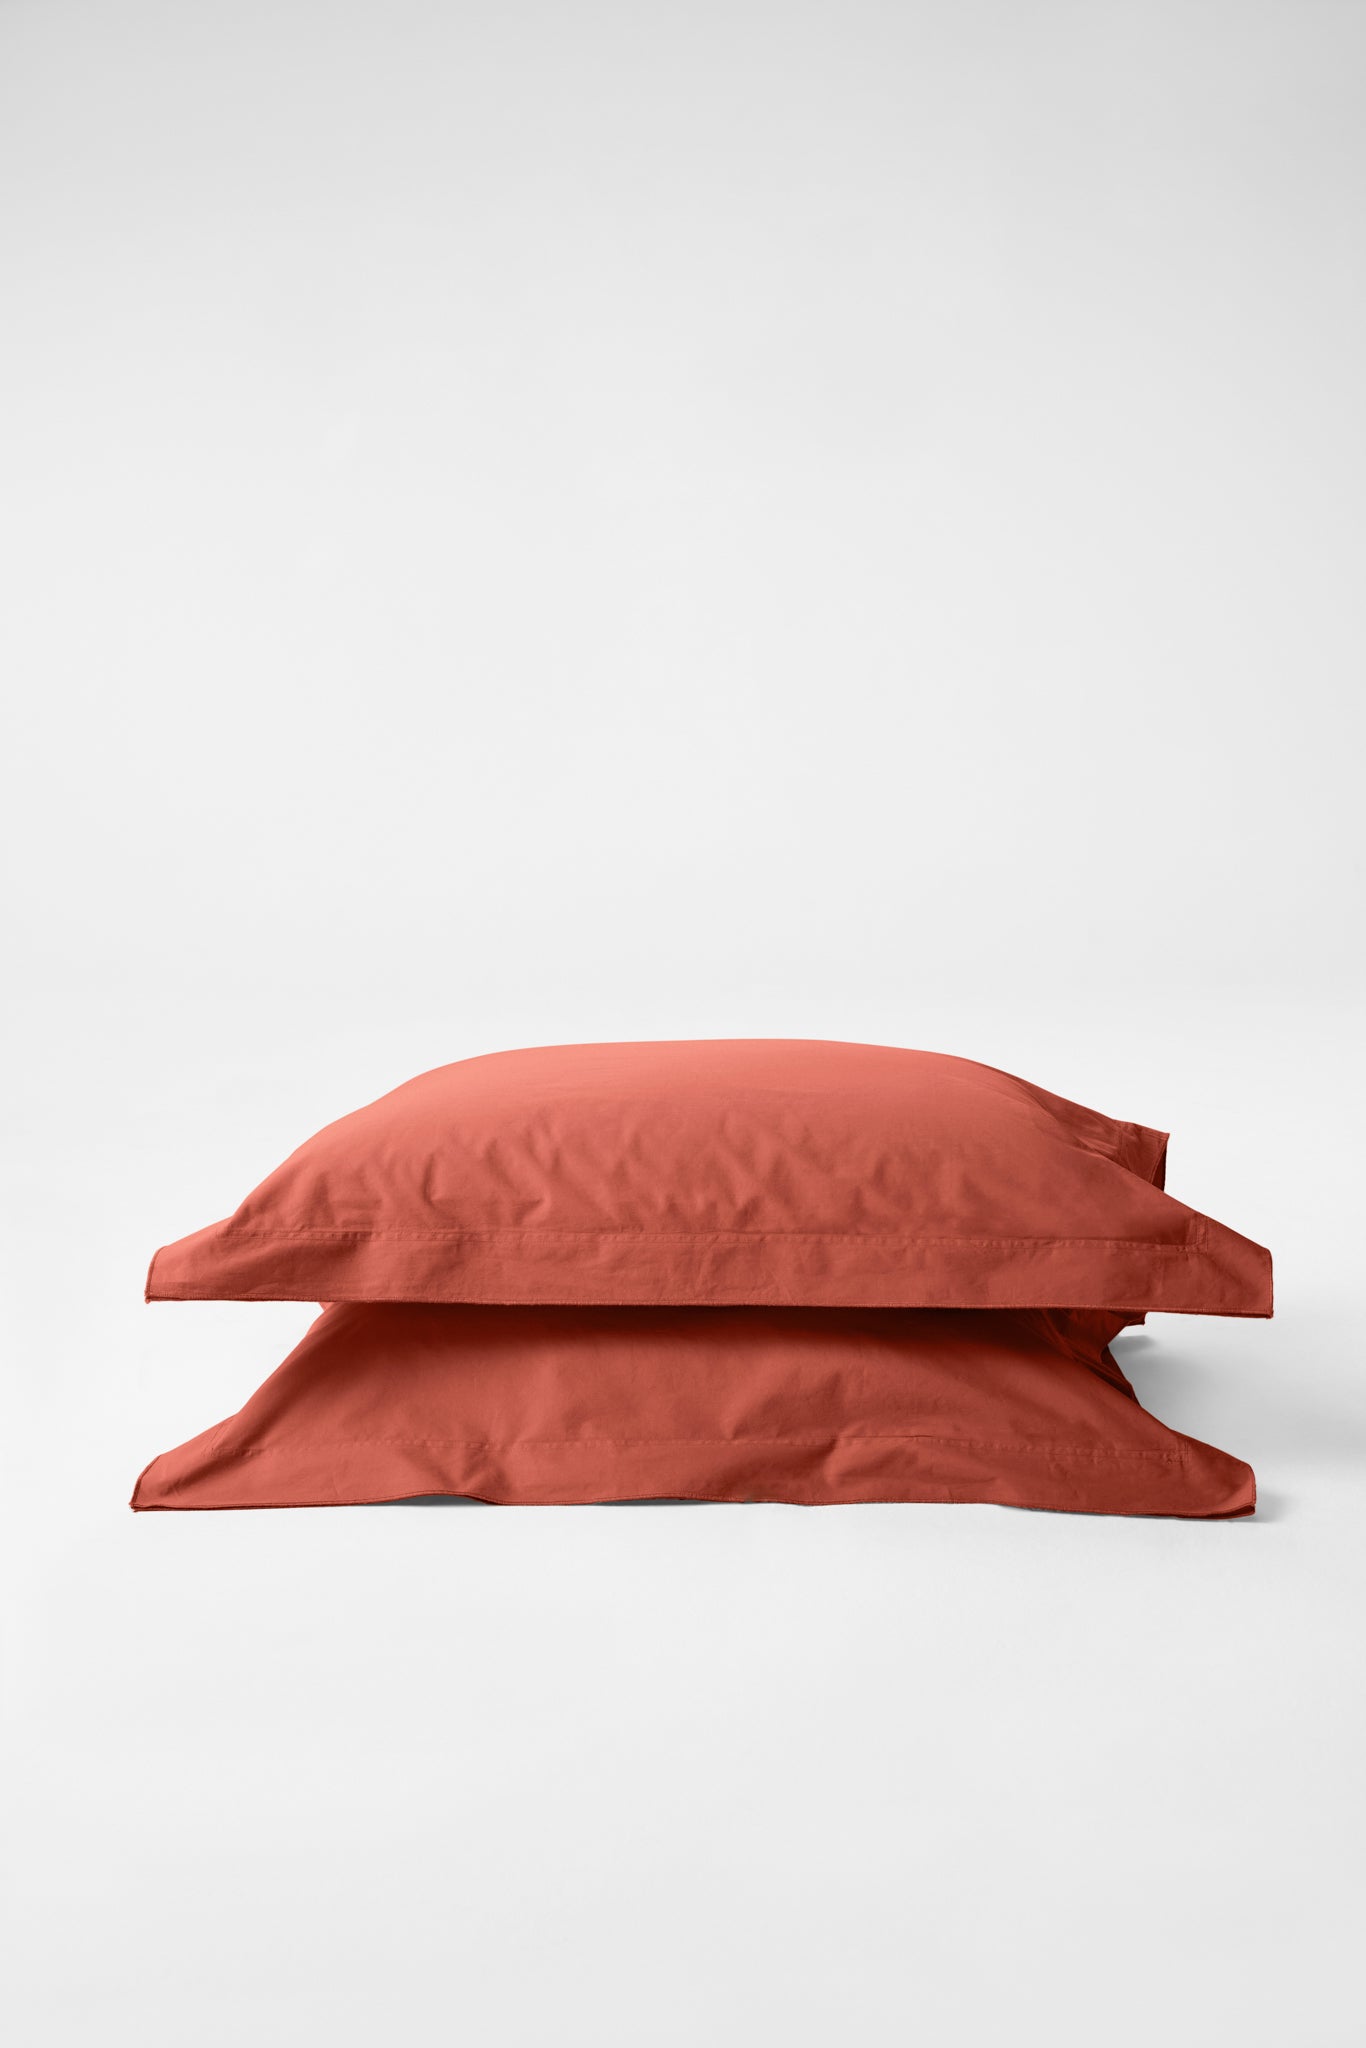 Pillowcase Pair in Ochre Red